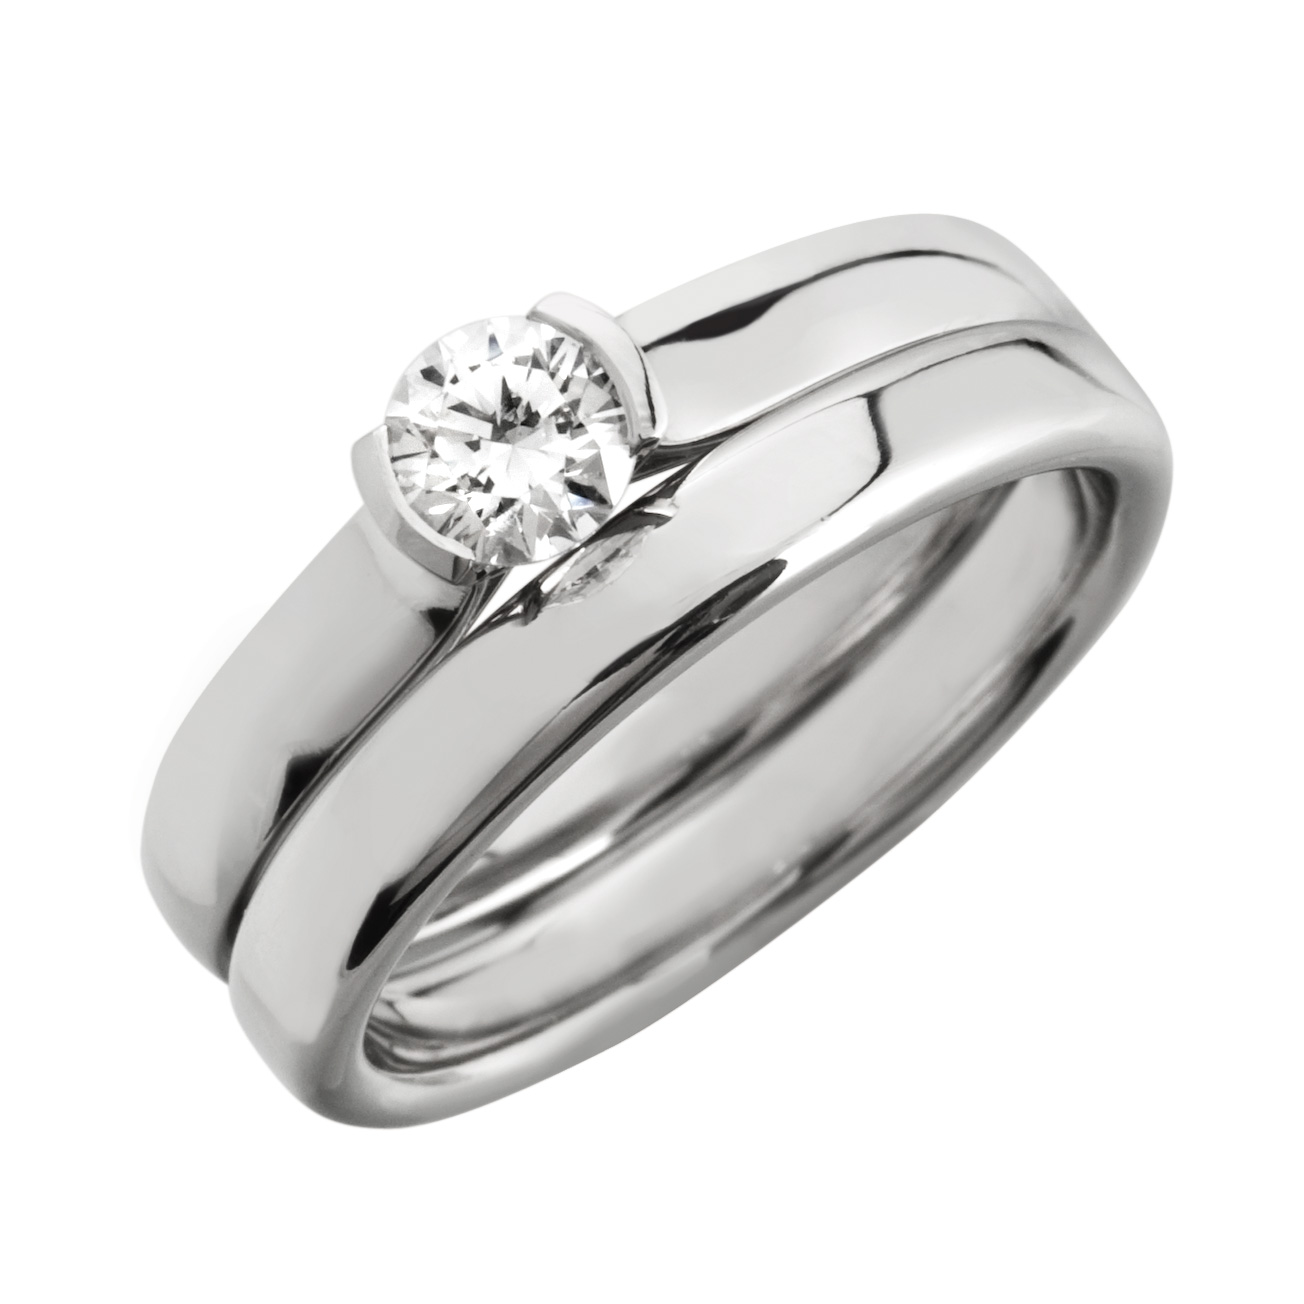 ... Range of Bridal Sets â€“ Matching Engagement Rings and Wedding Rings